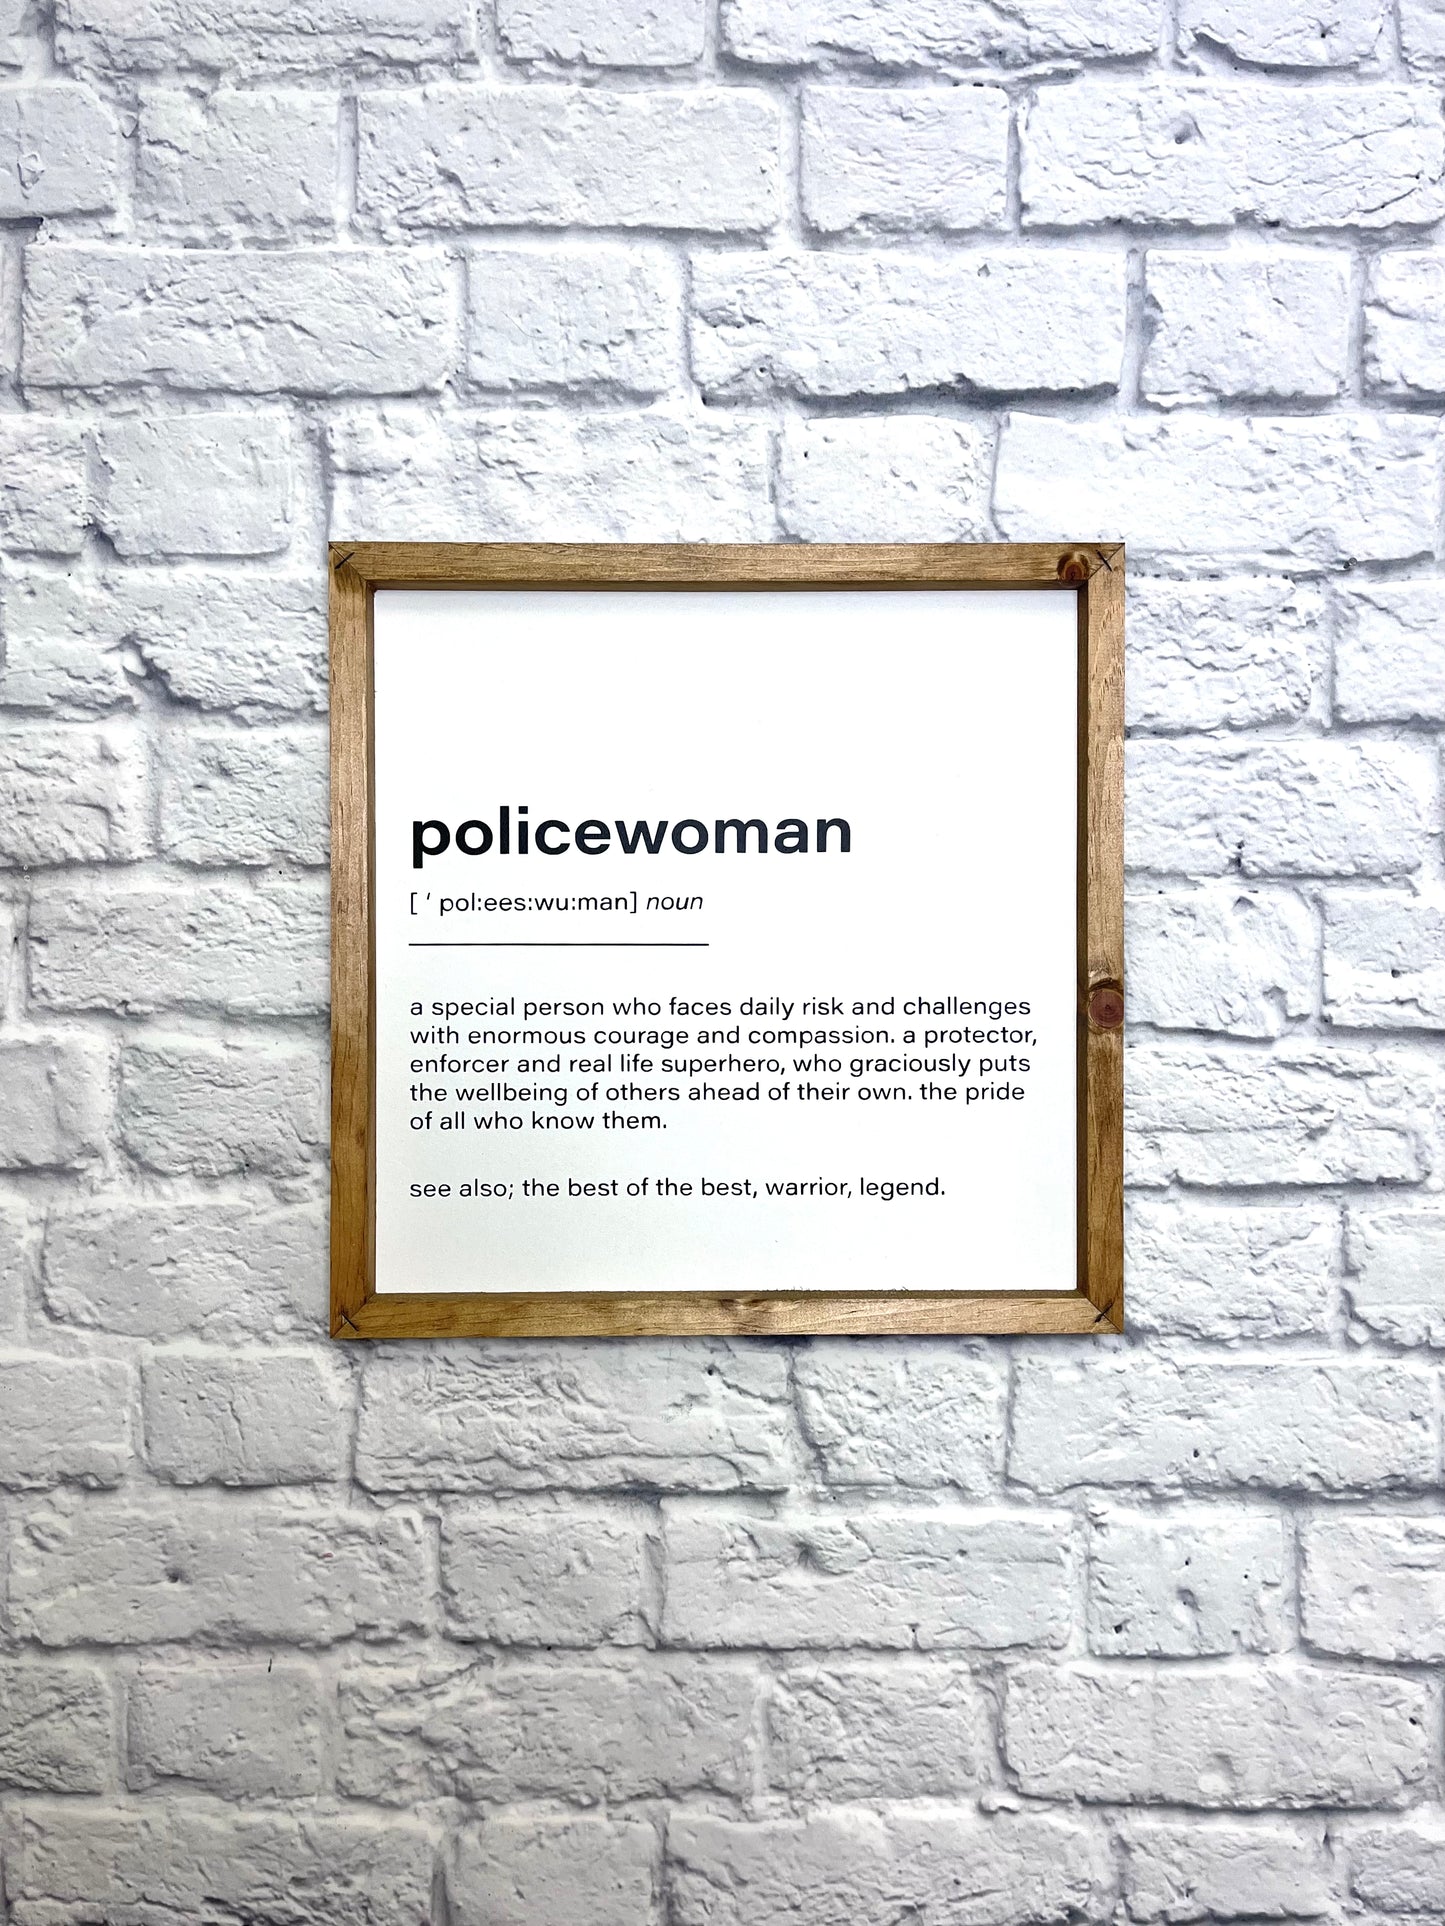 Policewoman Definition